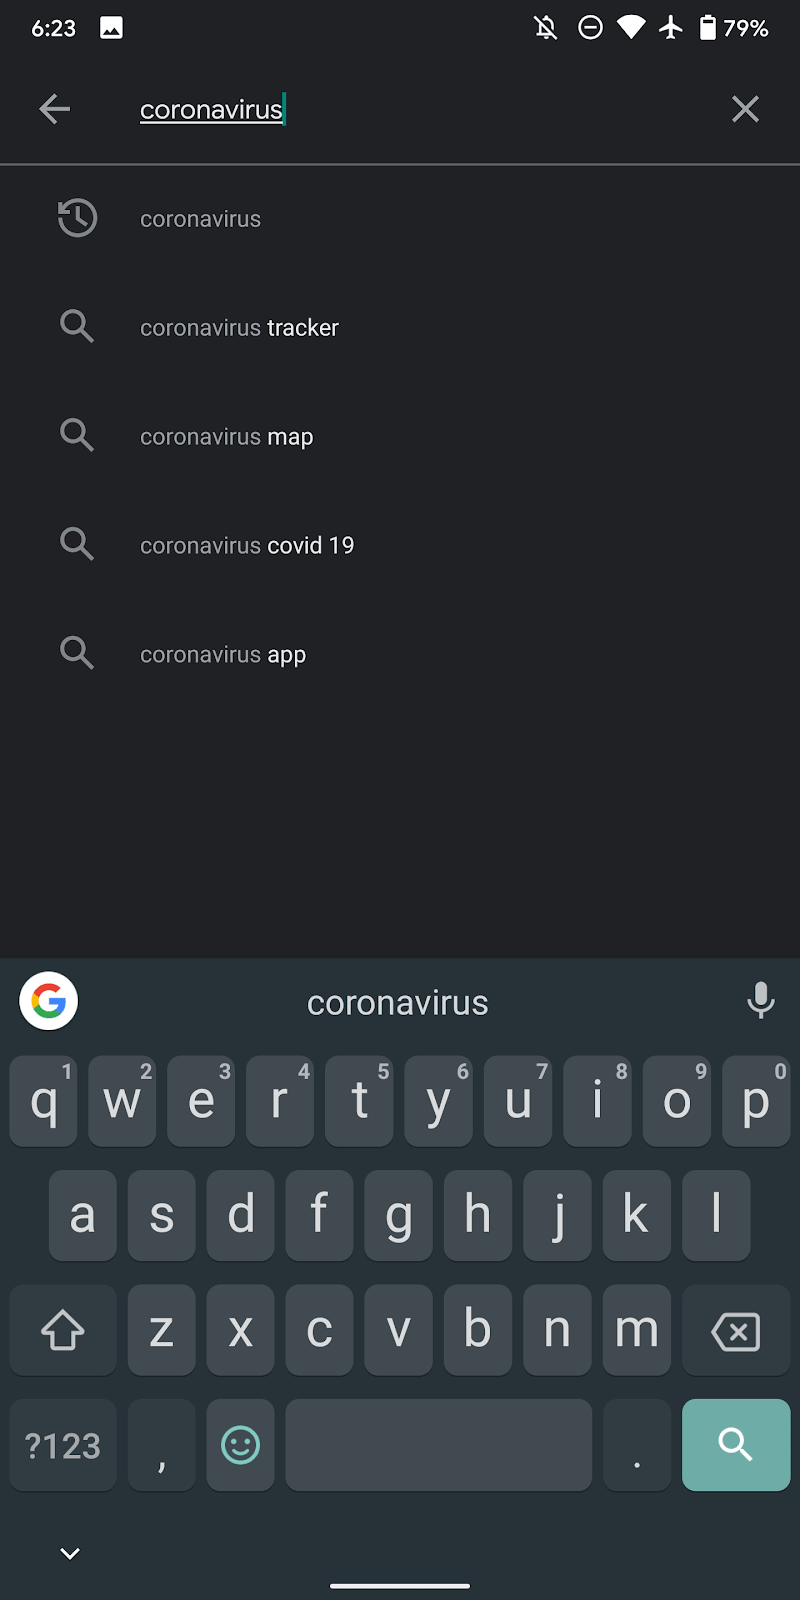 coronavirus search options on google play store